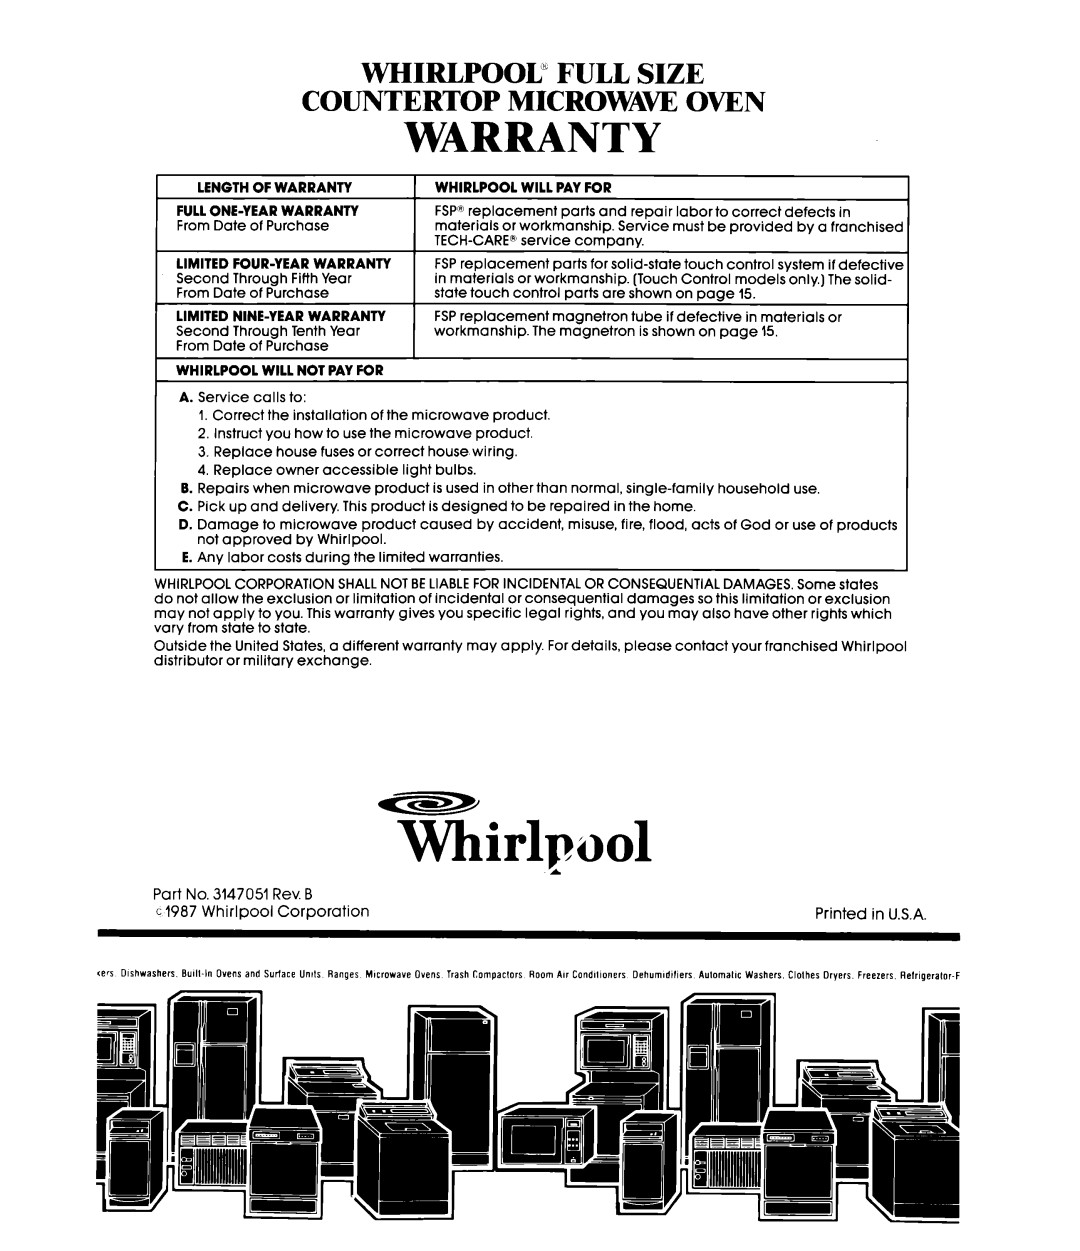 Whirlpool MW8500XS manual Warranty, Whirlpooij Full Size Countertop Microwaw Oven 